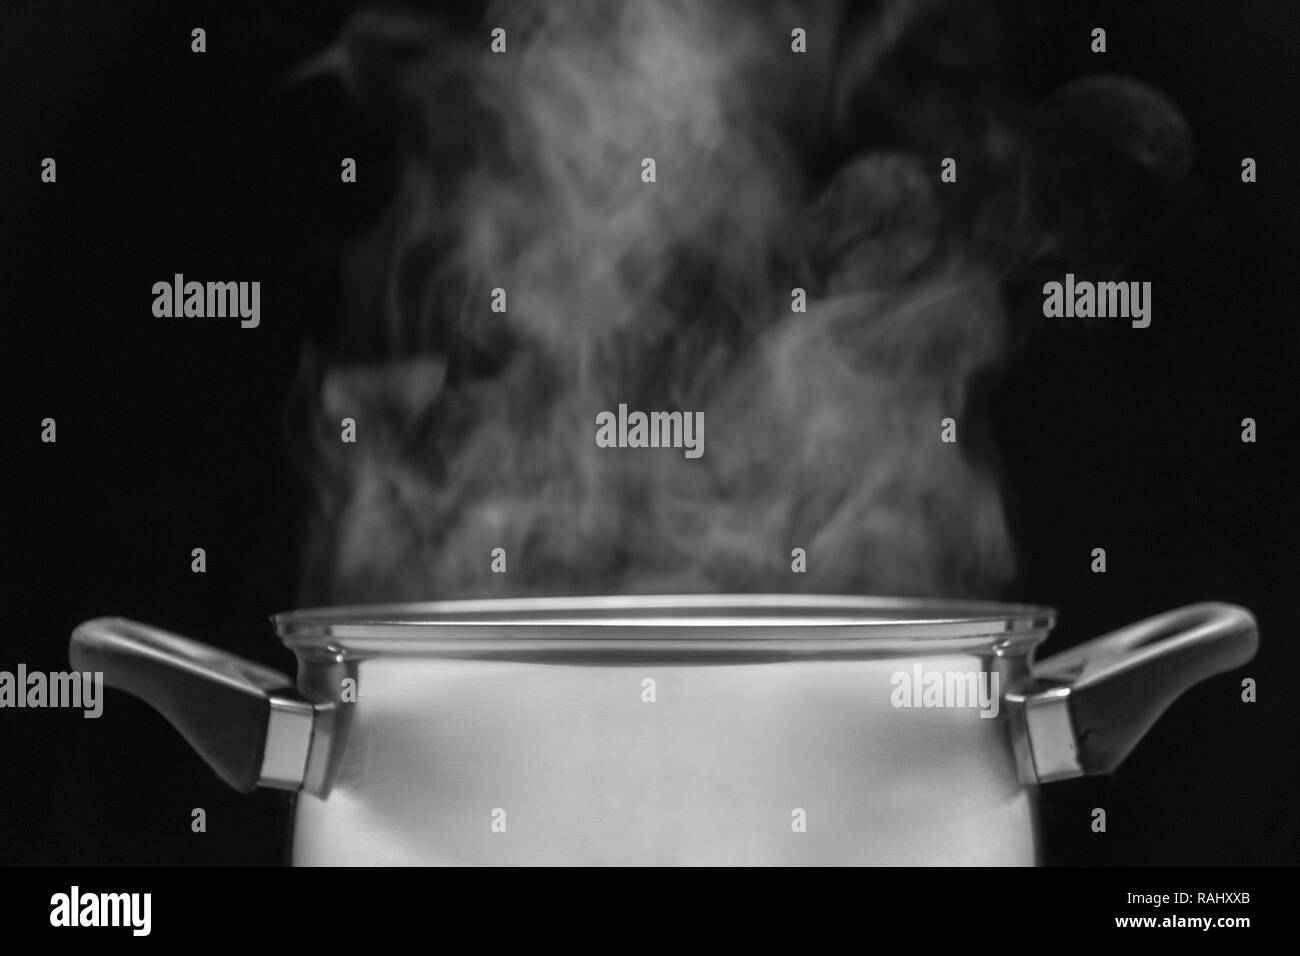 steam over cooking pot in kitchen on dark background Stock Photo